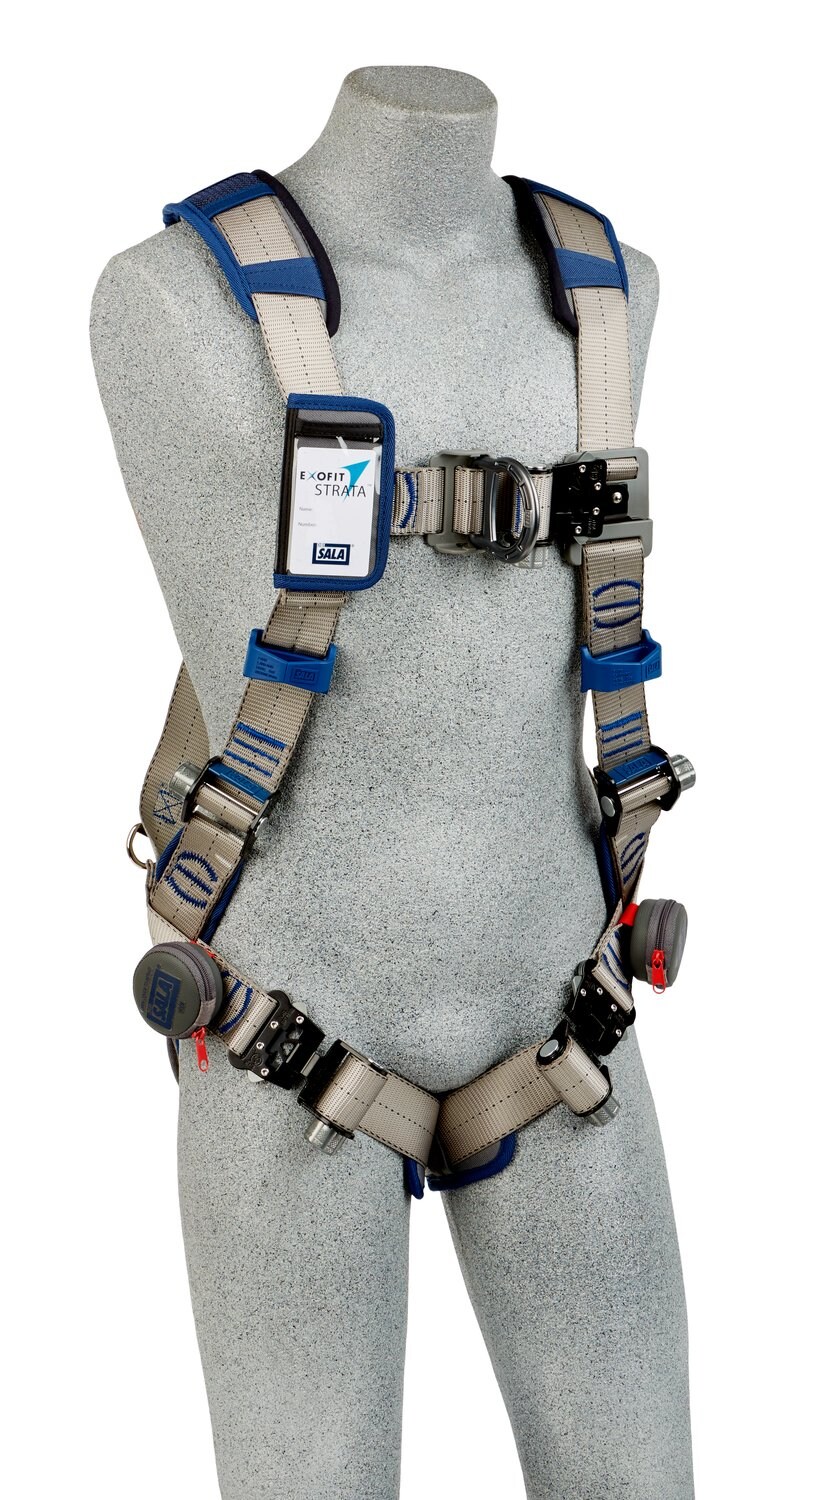 7100204301 - 3M DBI-SALA ExoFit STRATA Comfort Vest Climbing Safety Harness
1112485, Small